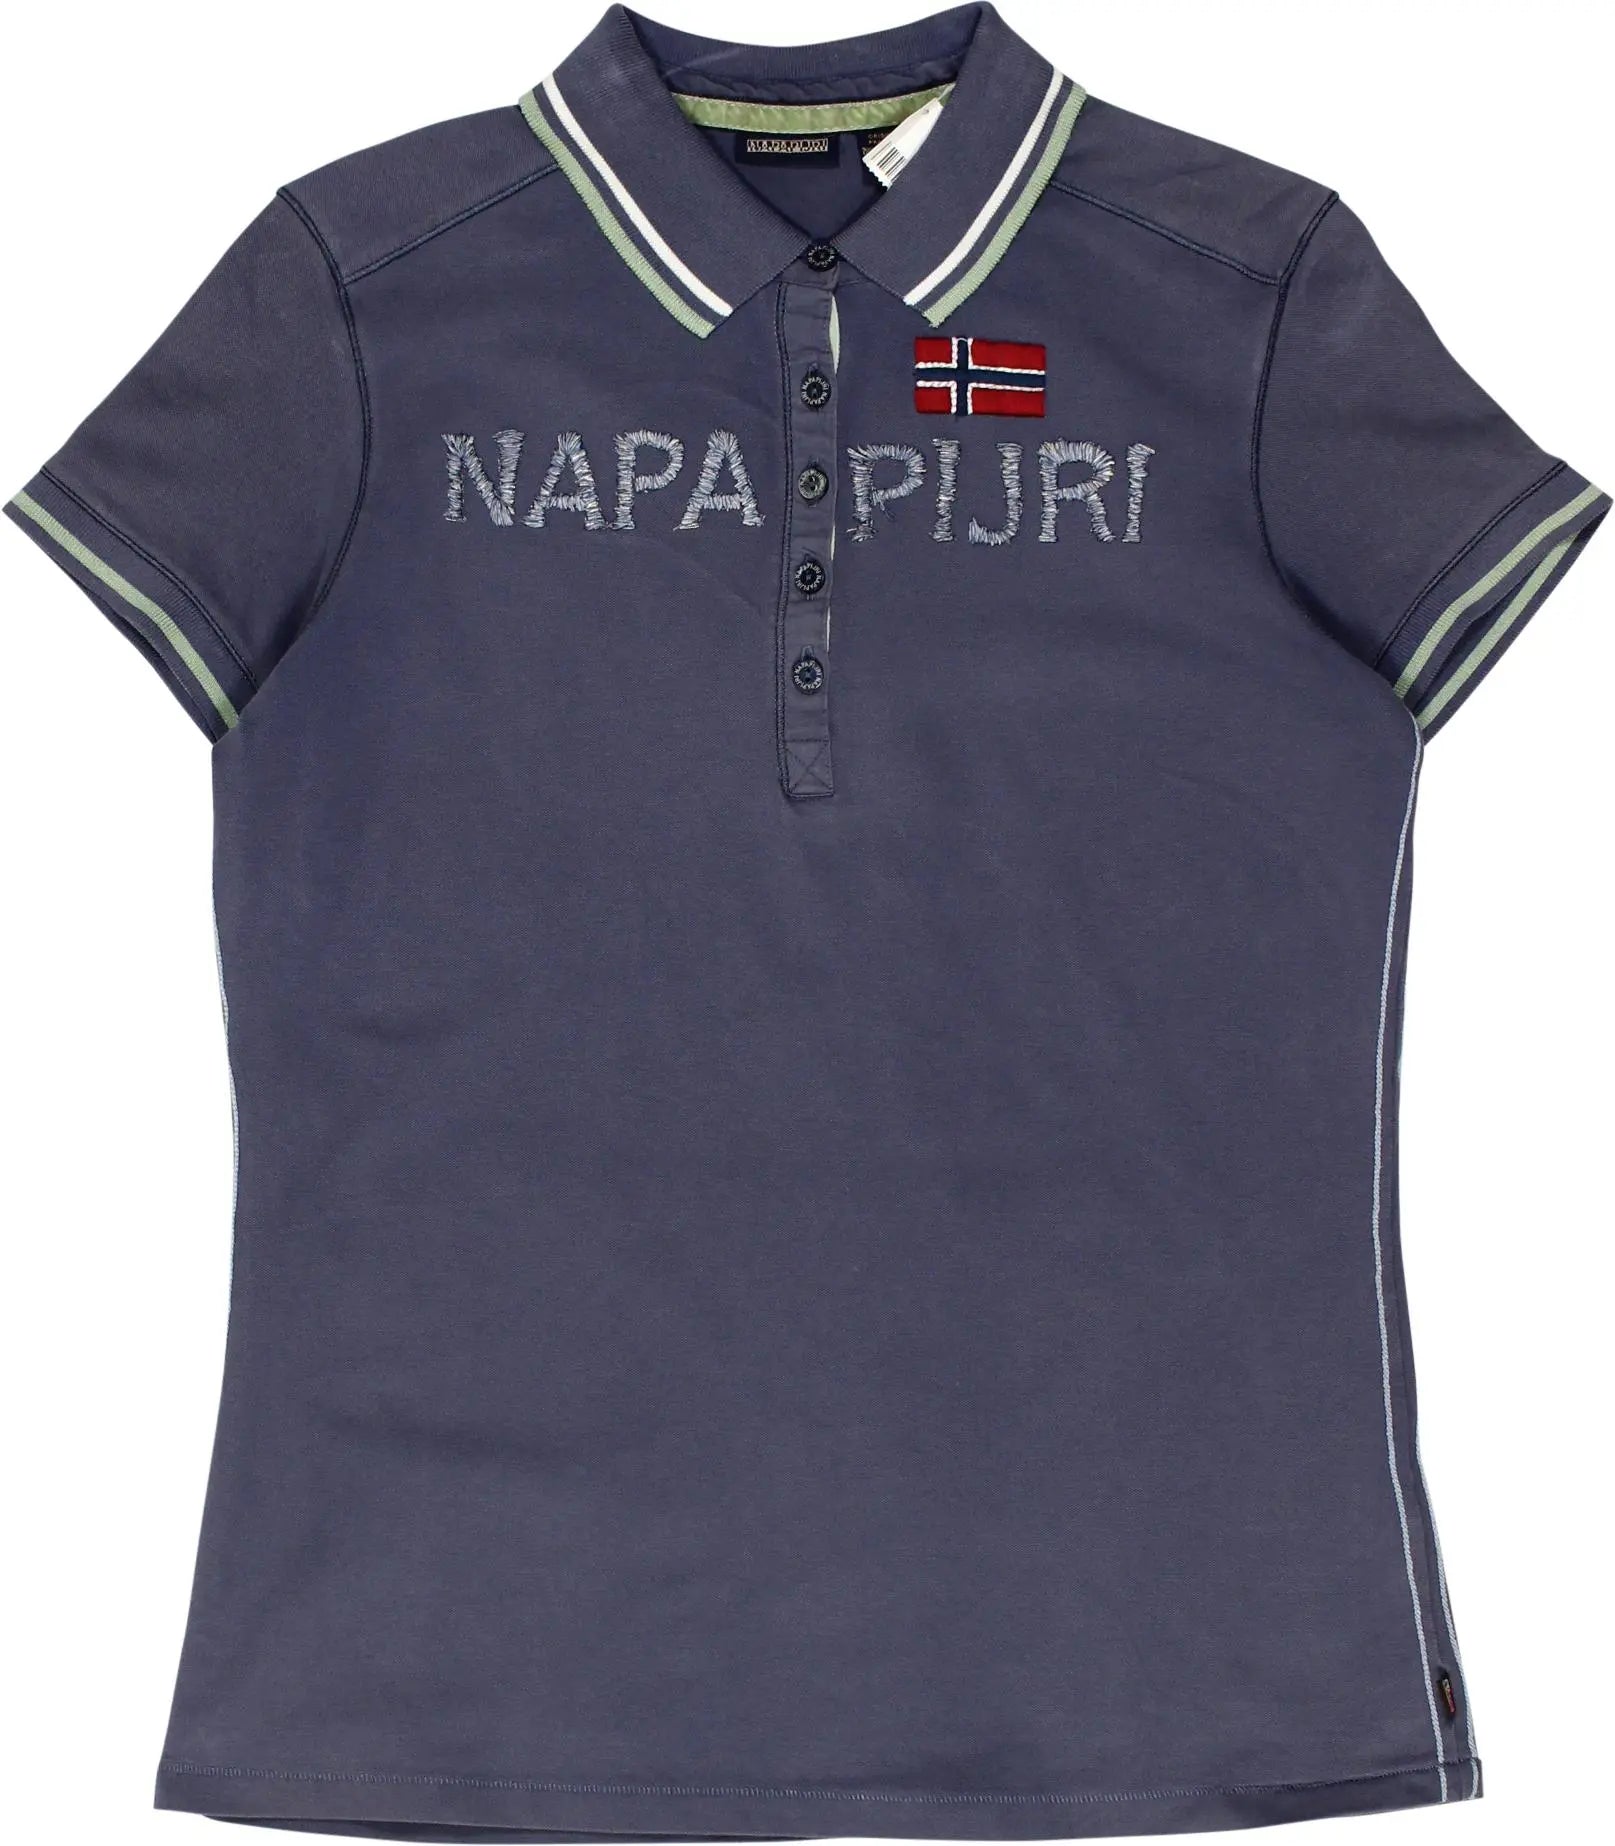 Napapijri - Polo Shirt by Napapijri- ThriftTale.com - Vintage and second handclothing